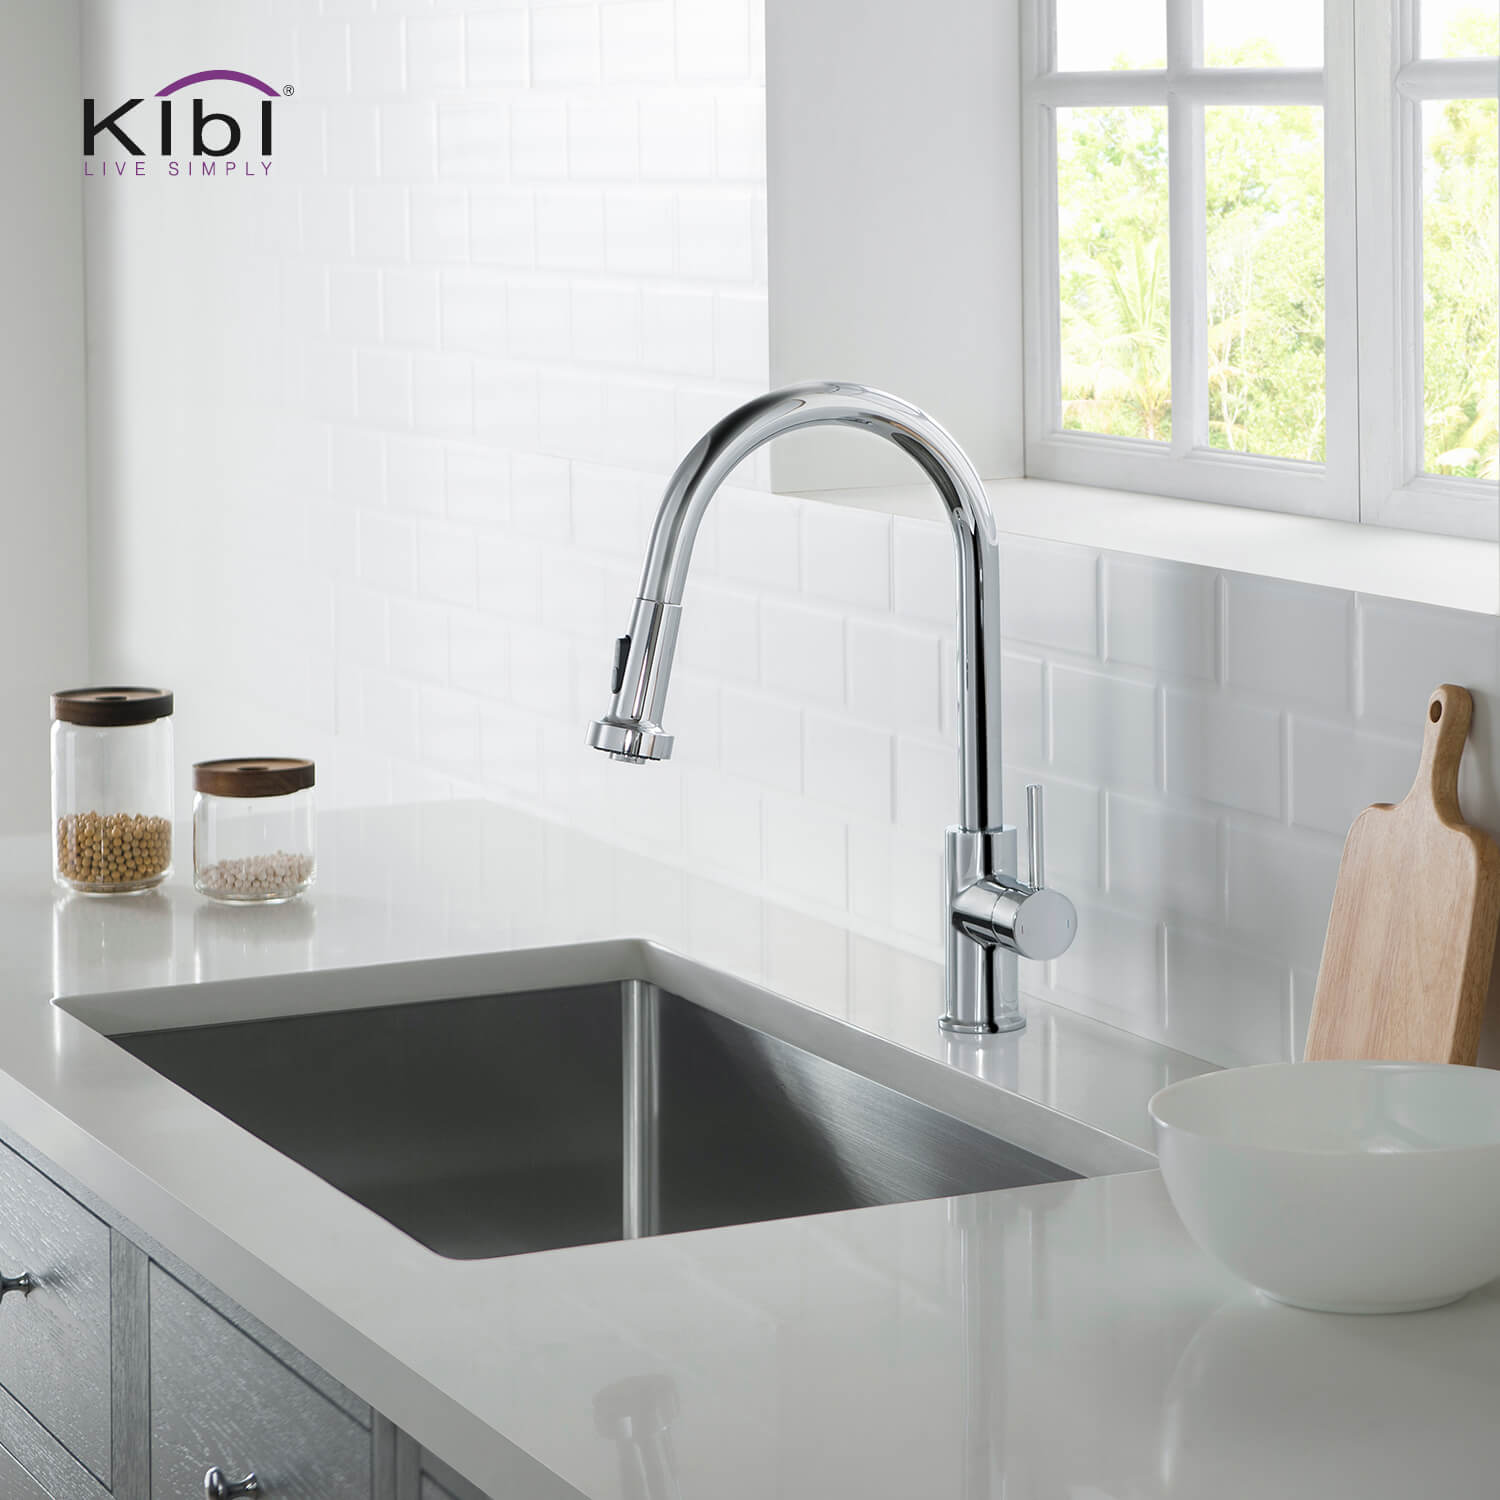 Kibi Casa Single Handle High Arc Pull Down Kitchen Faucet in Chrome Finish